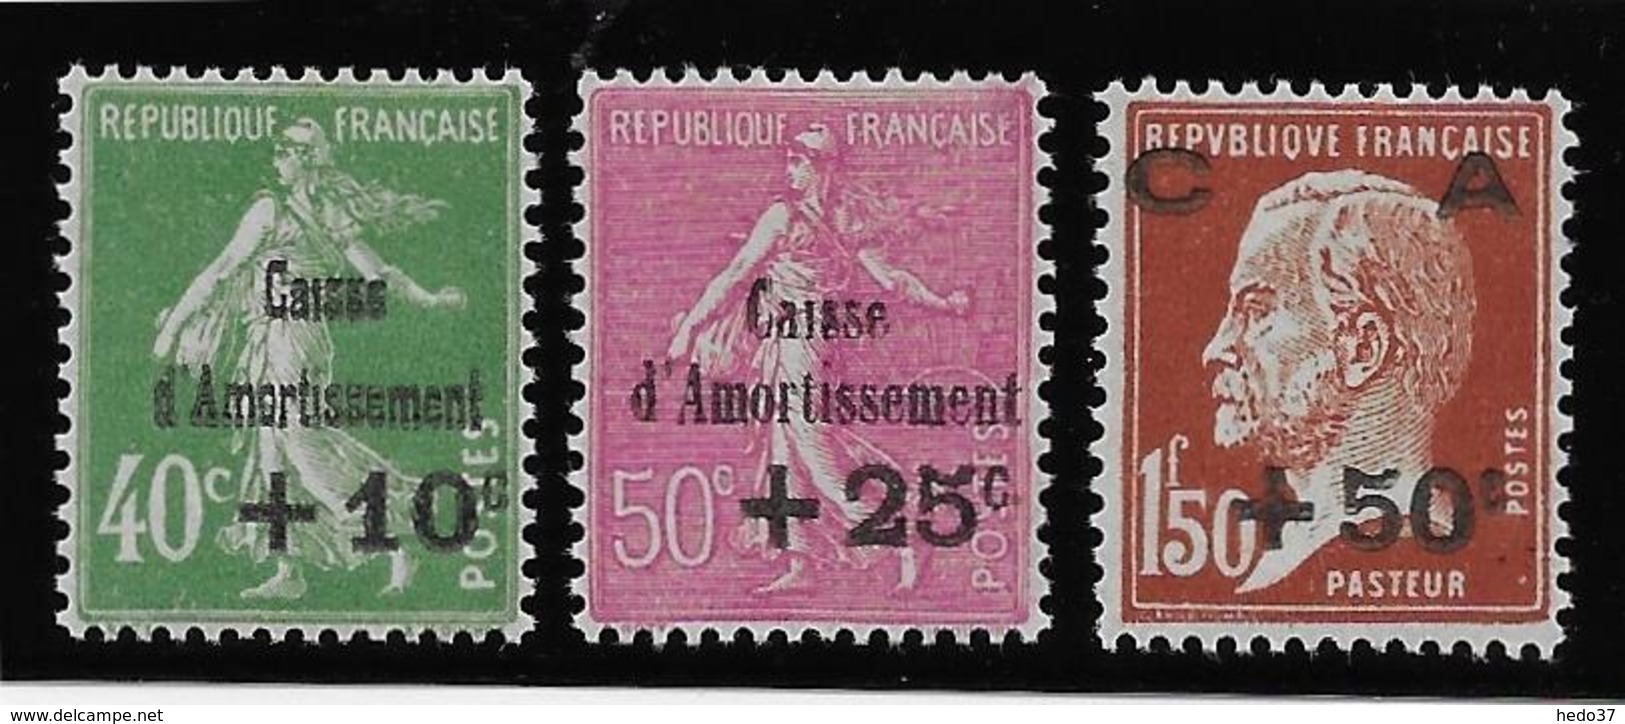 France N°253/255 - Neuf * Avec Charnière - TB - Neufs